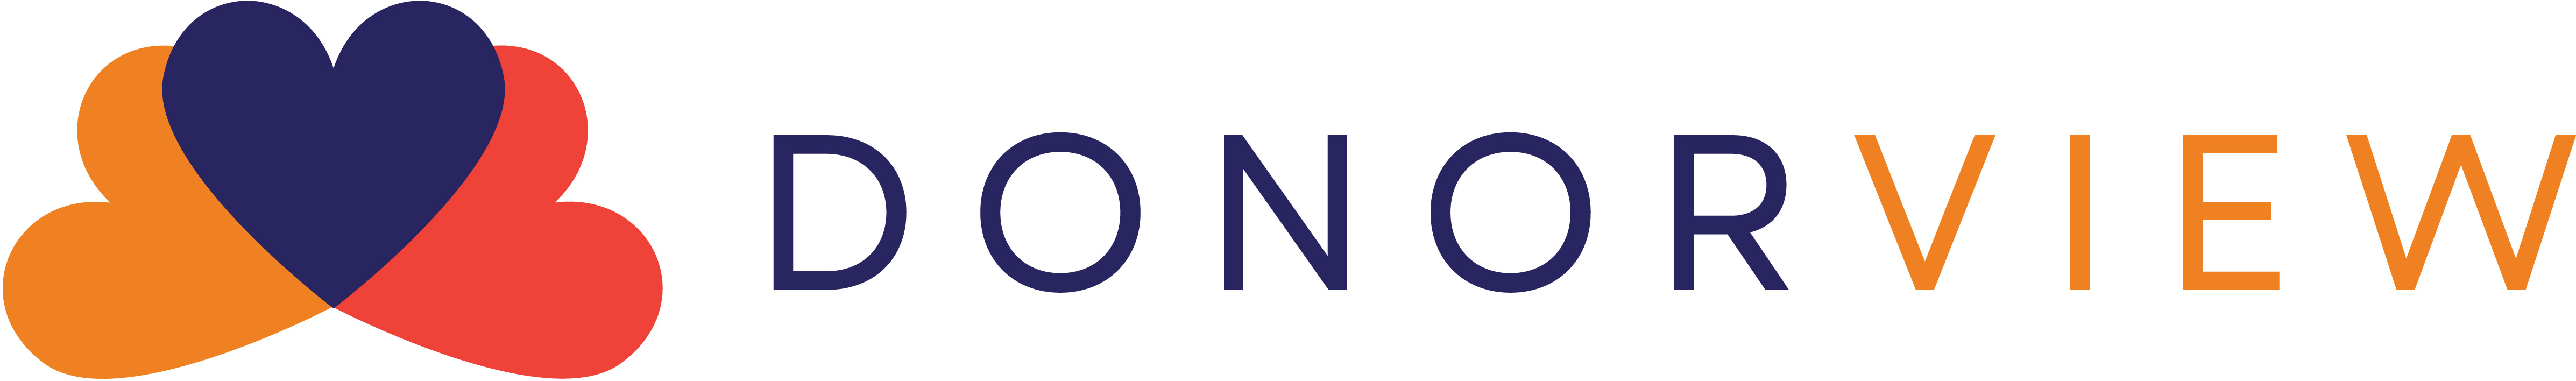 Donorview logo